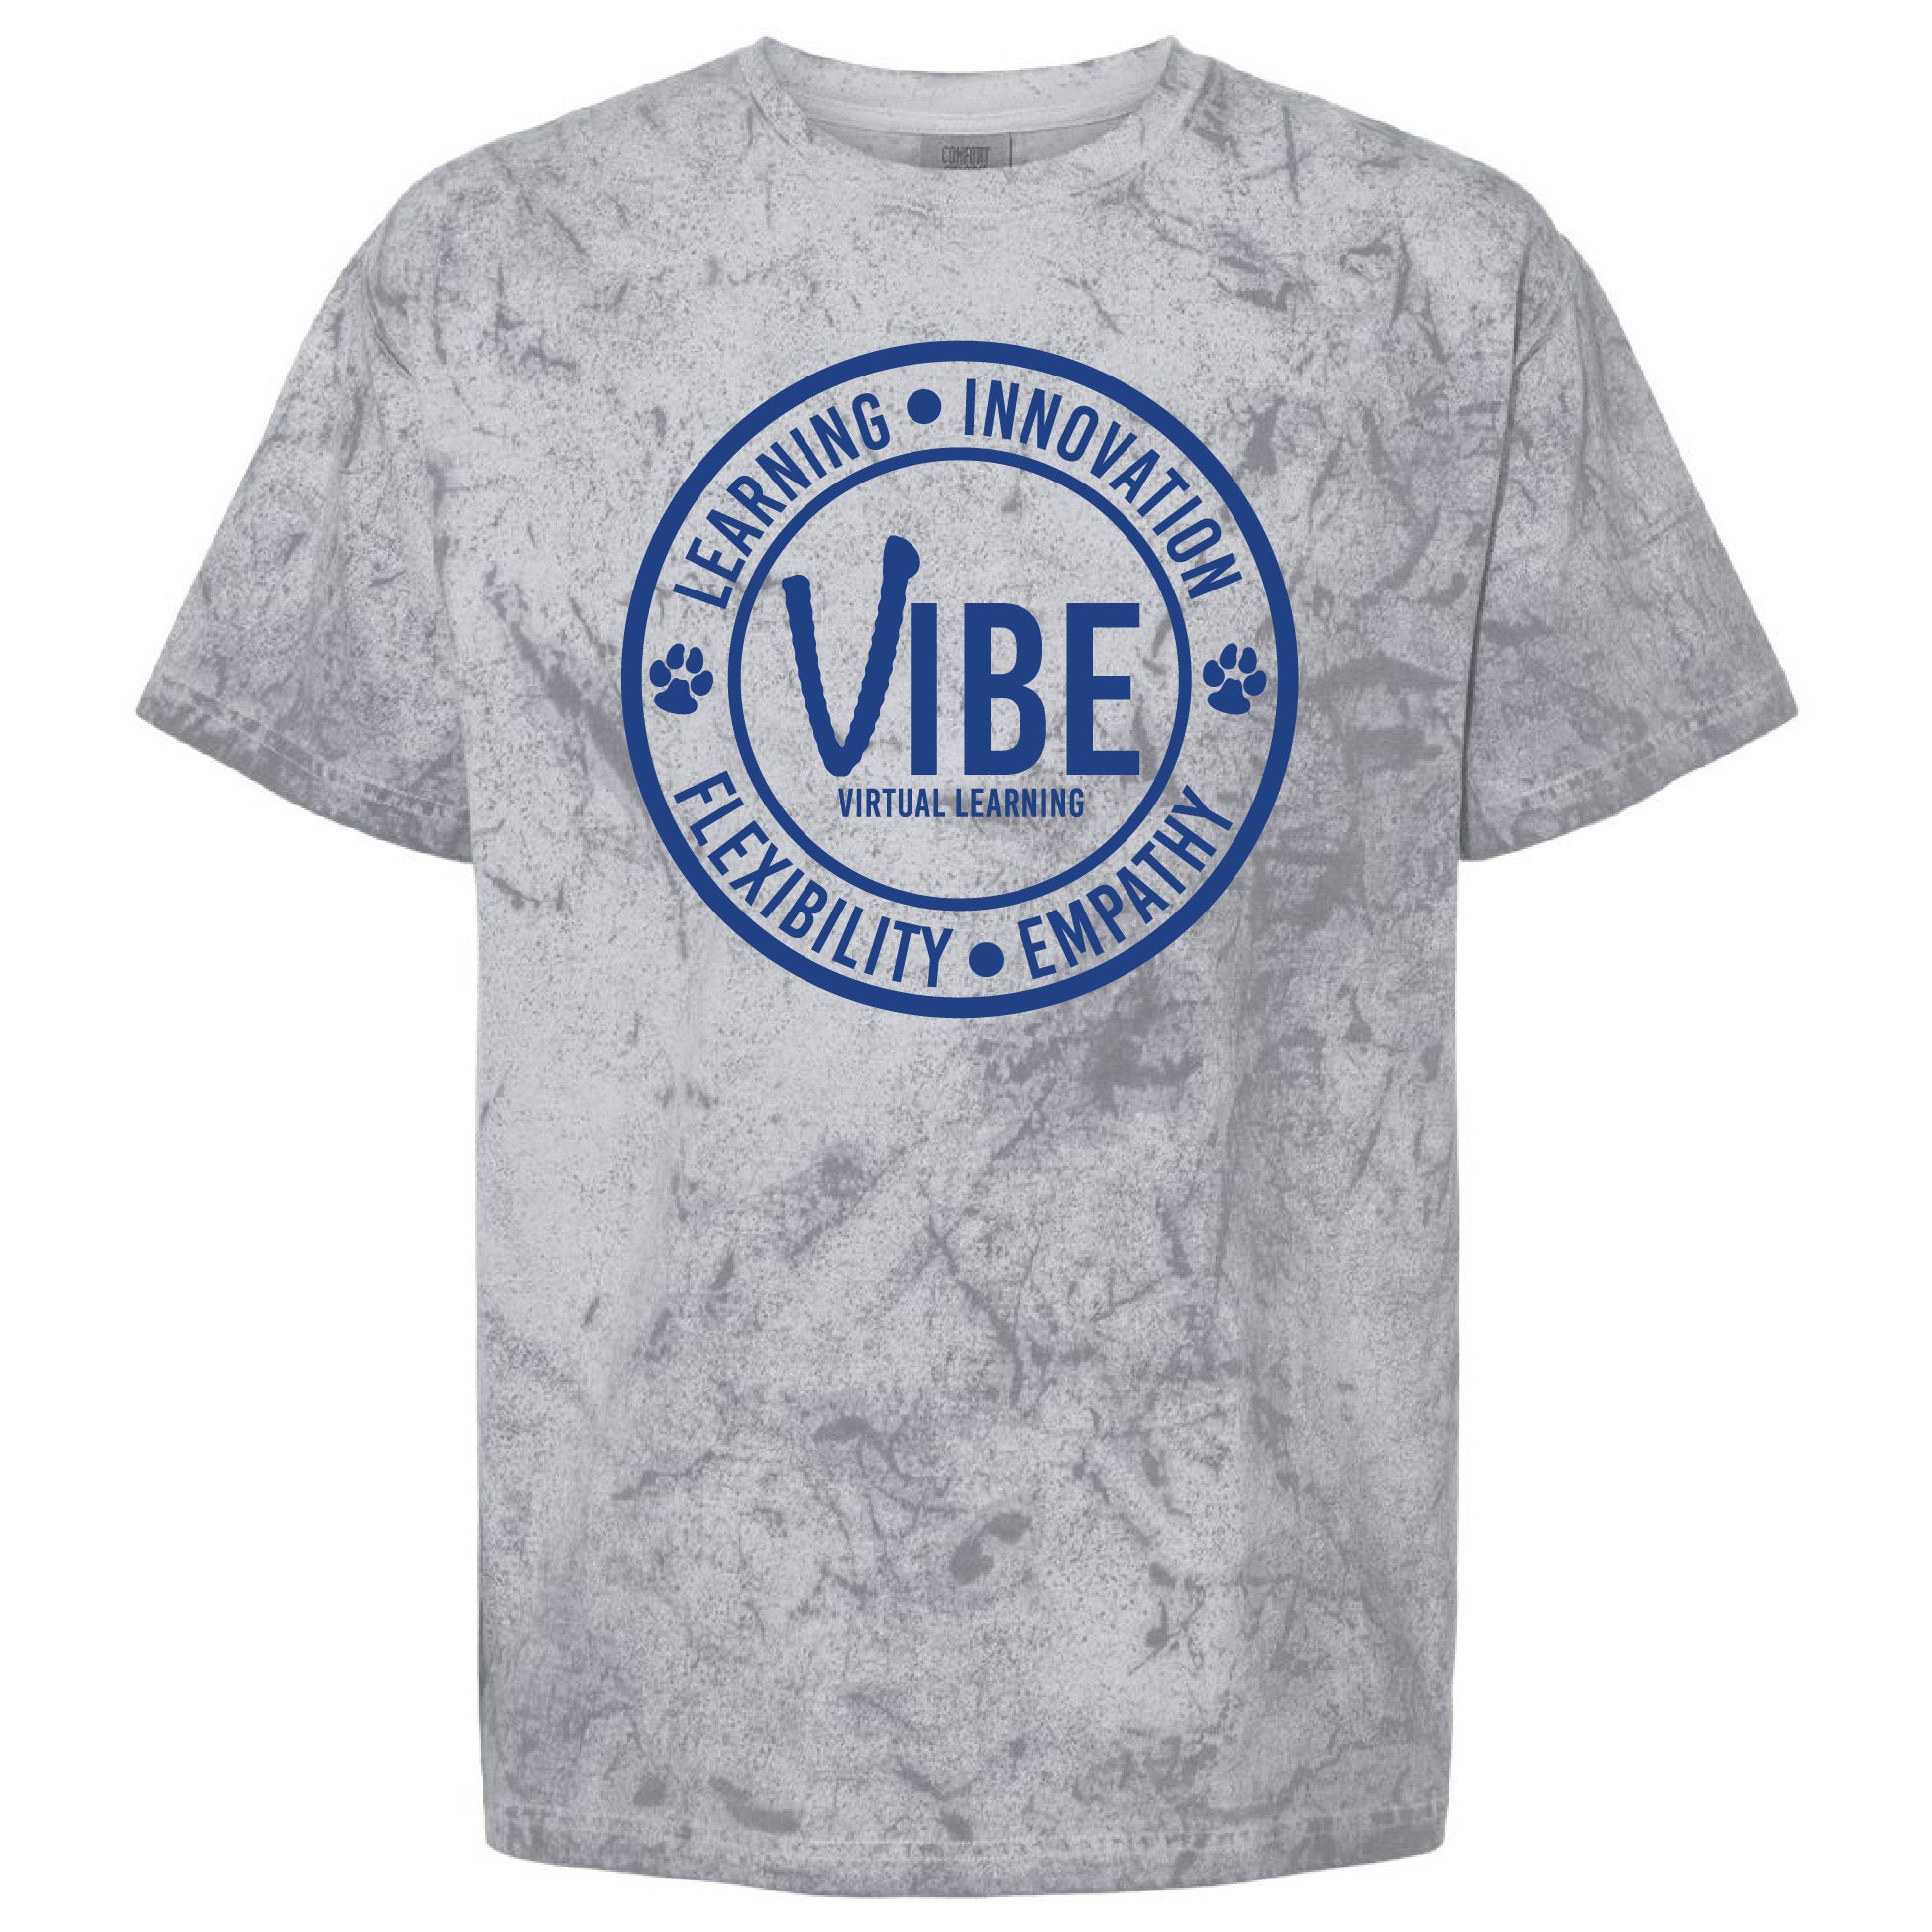 VIBE Colorblast T-Shirt